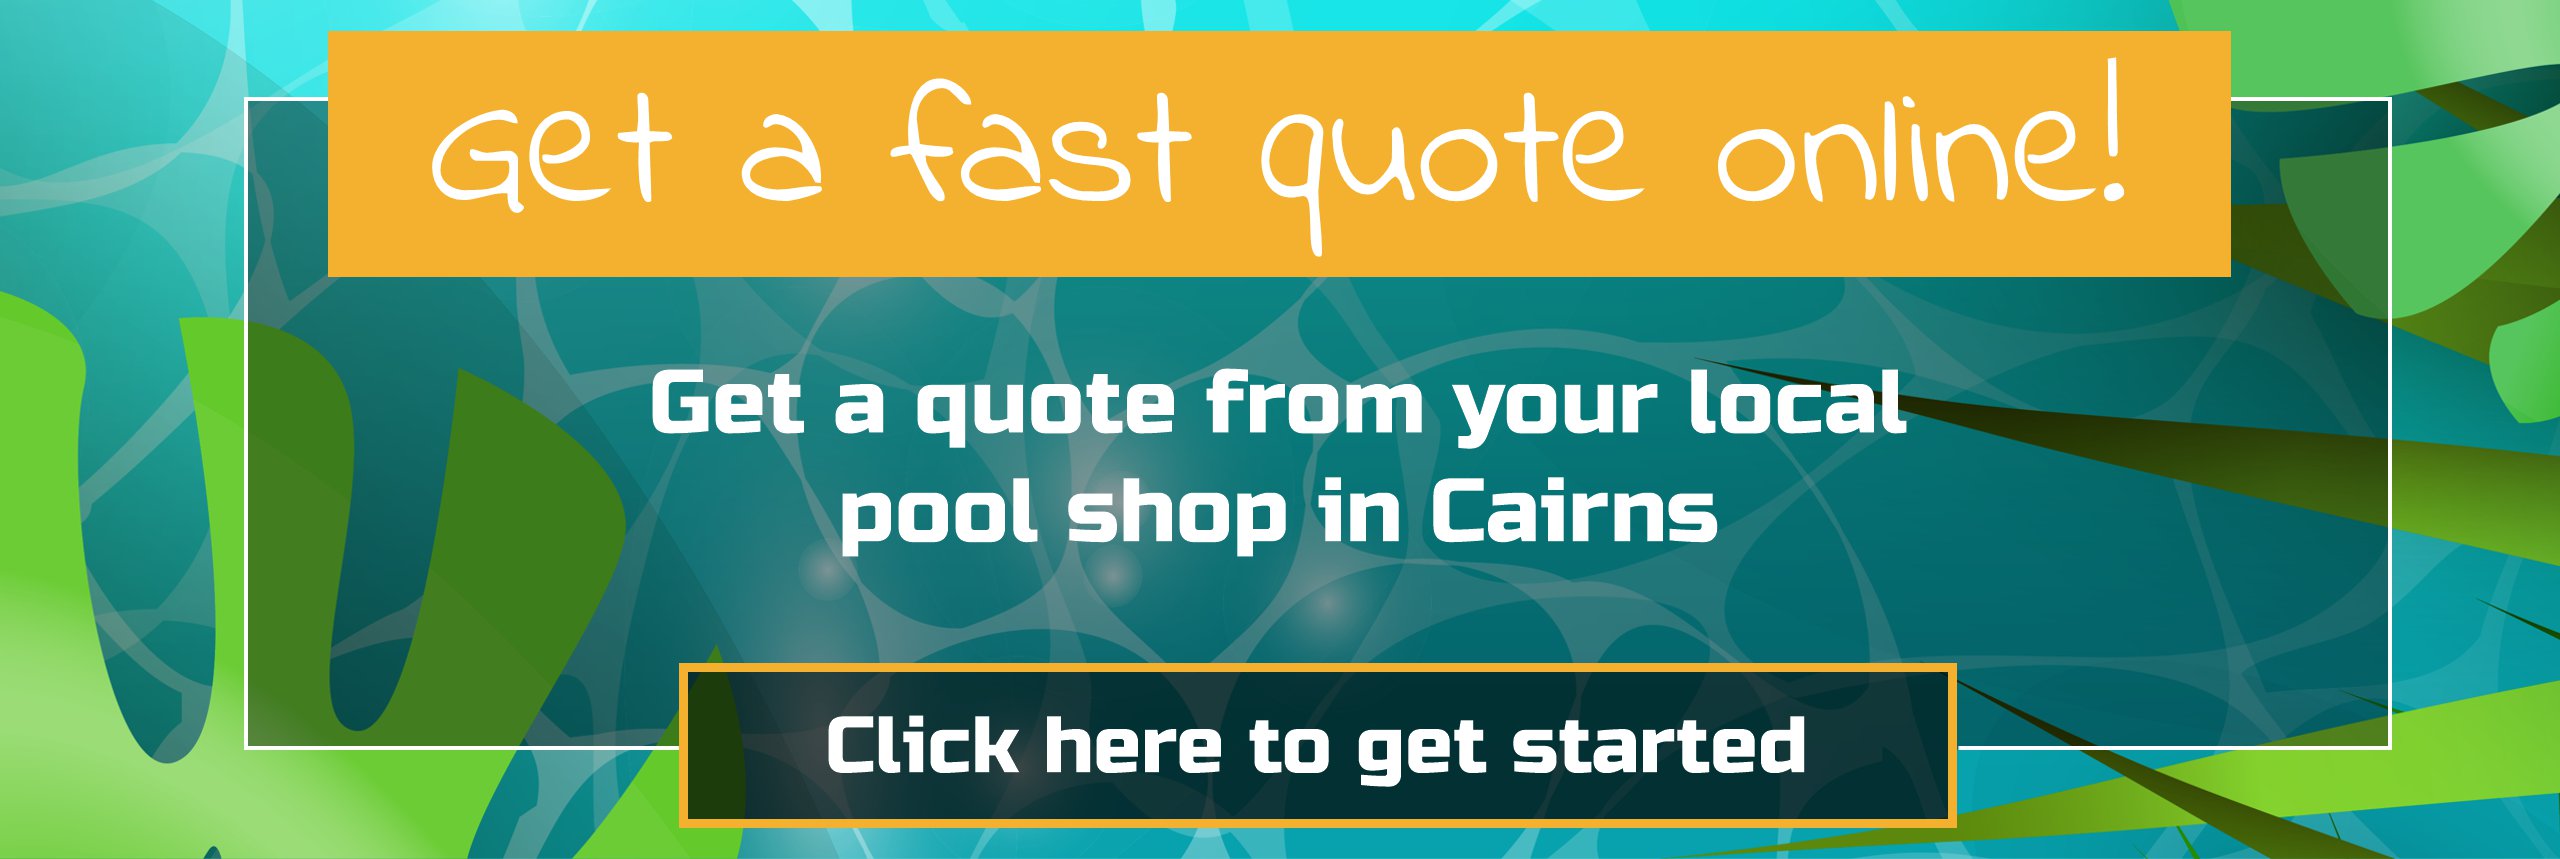 Cairns Pool Shop